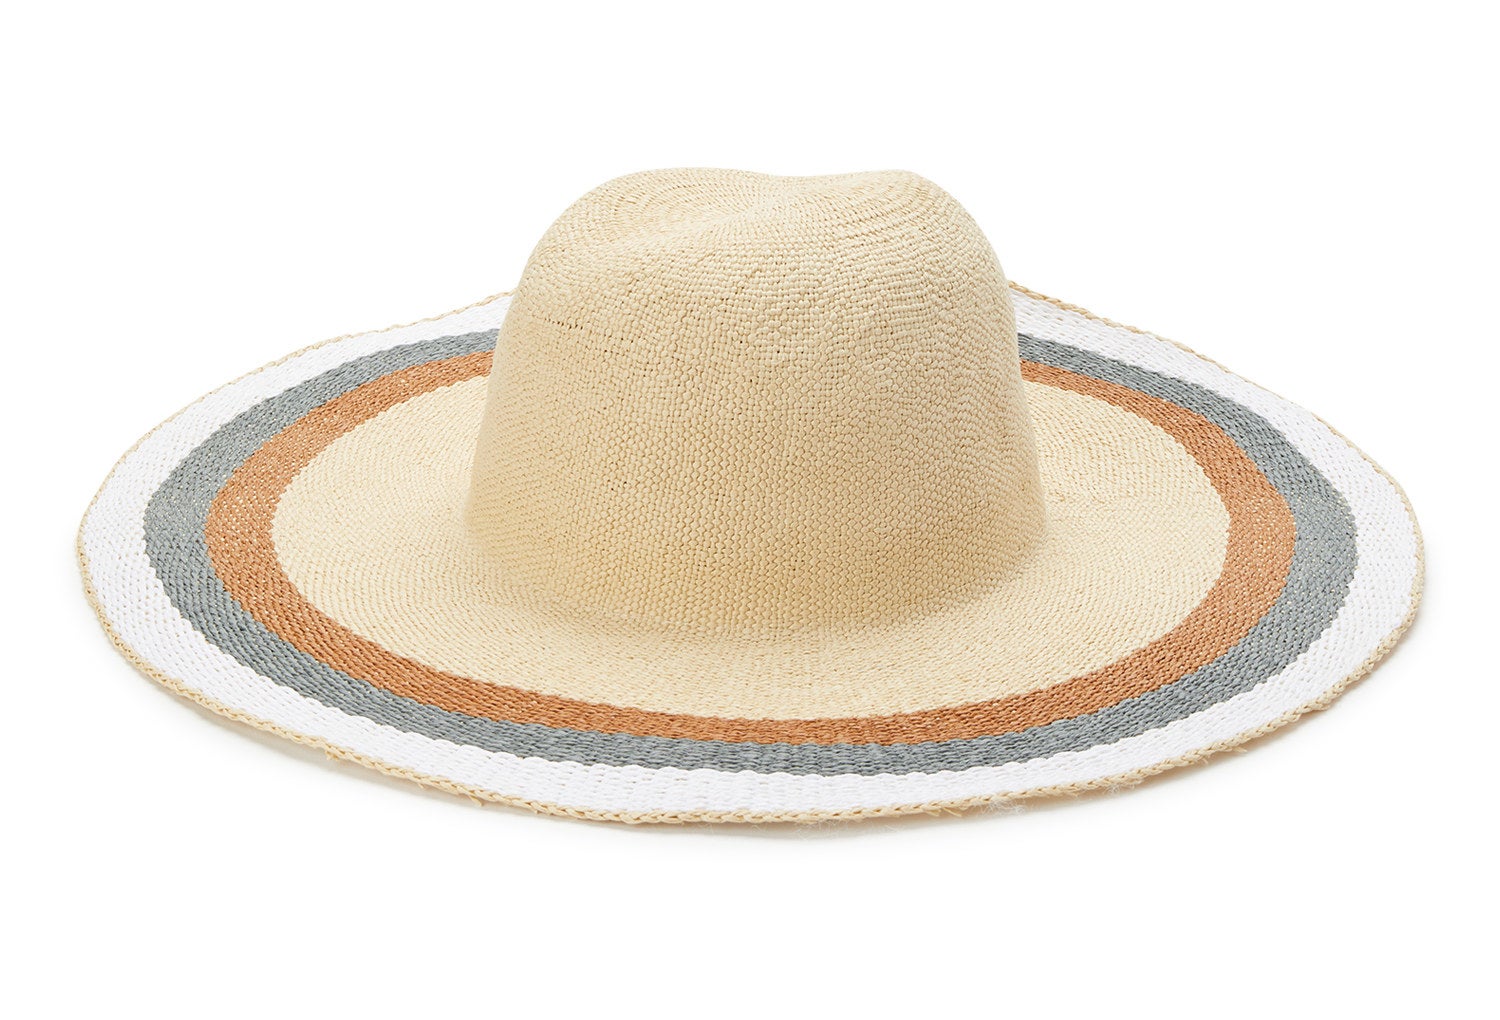 the straw sun hat